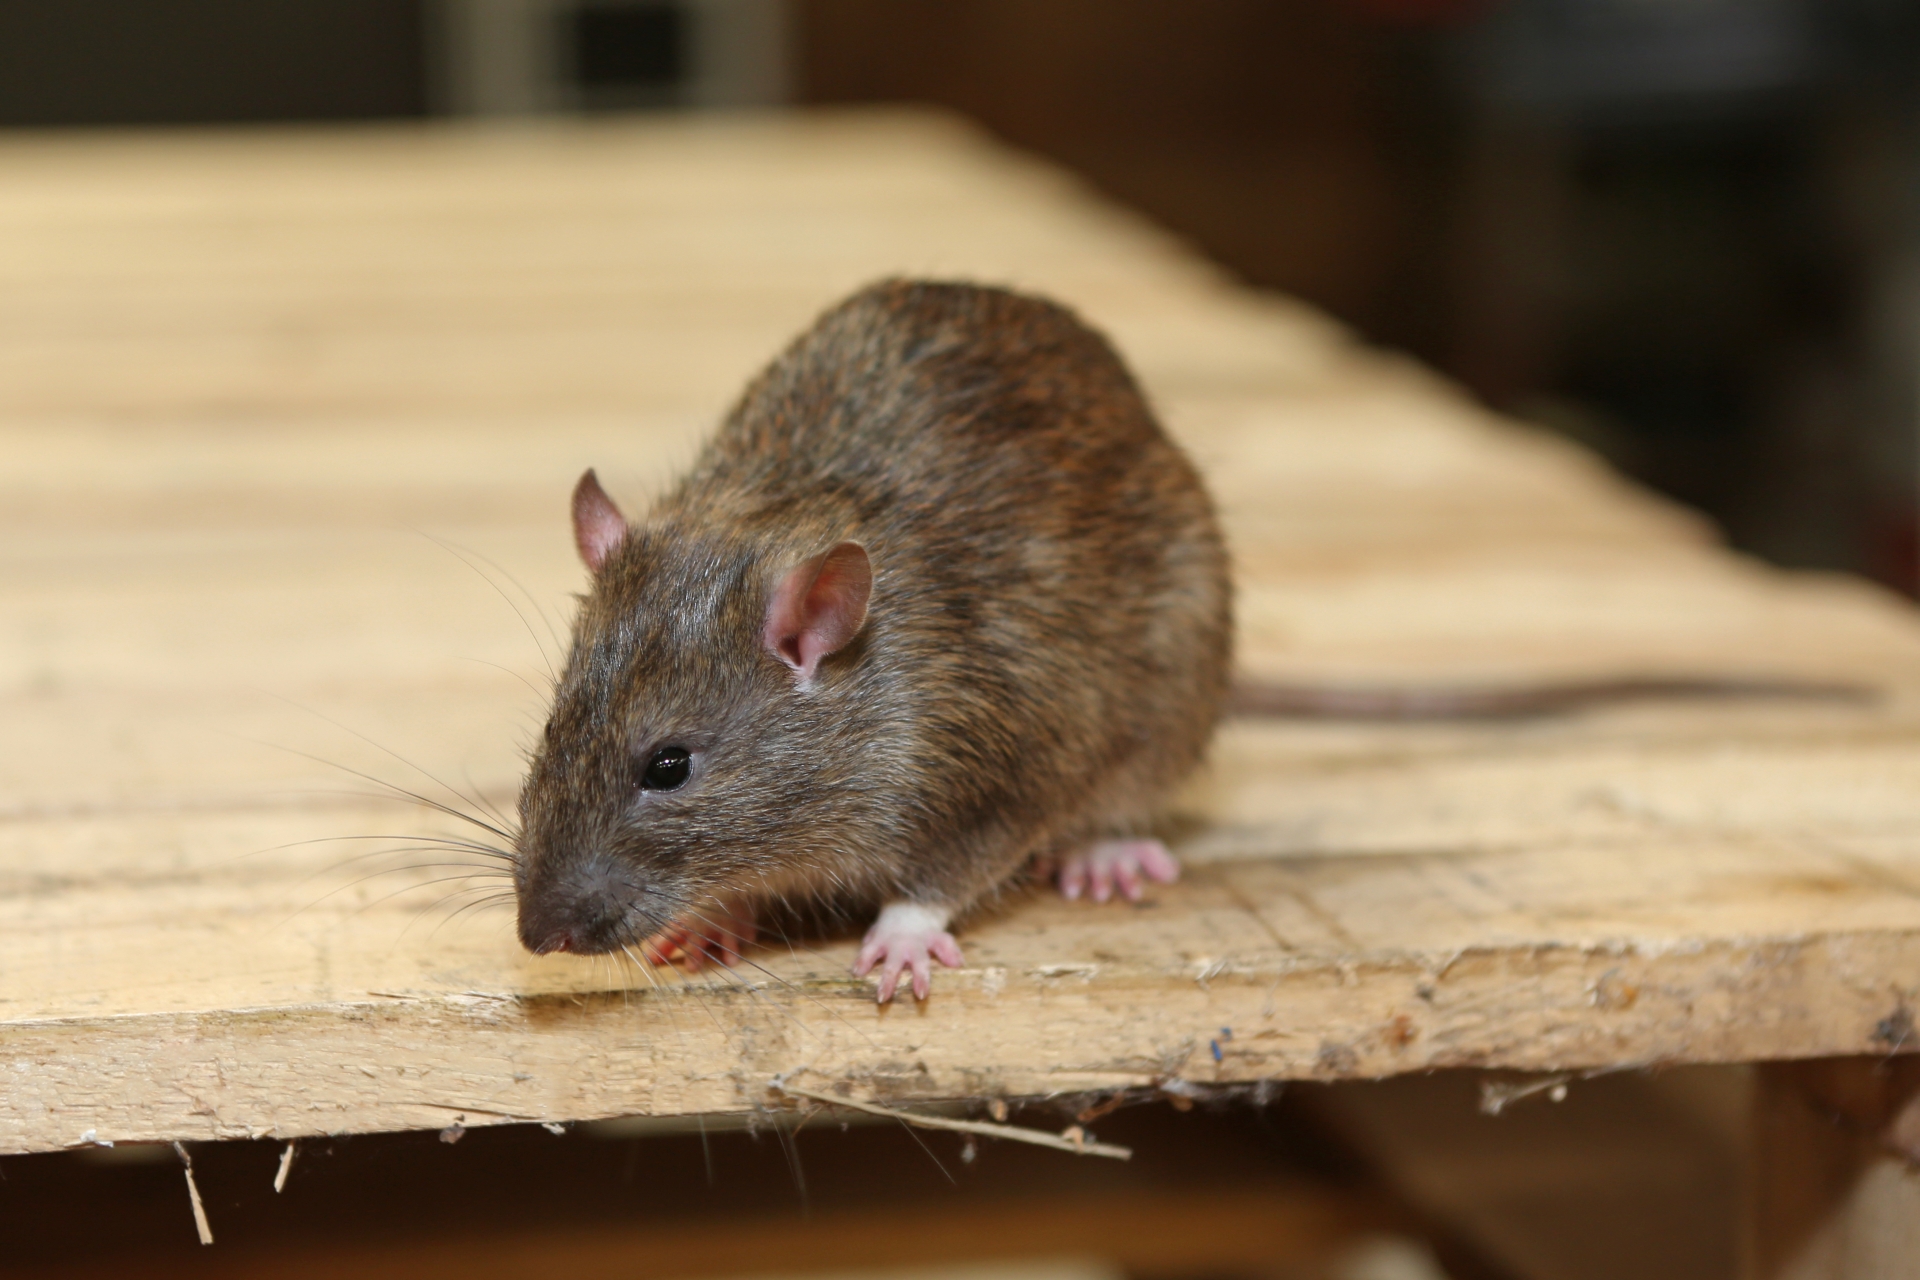 Rat extermination, Pest Control in Balham, SW12. Call Now 020 8166 9746